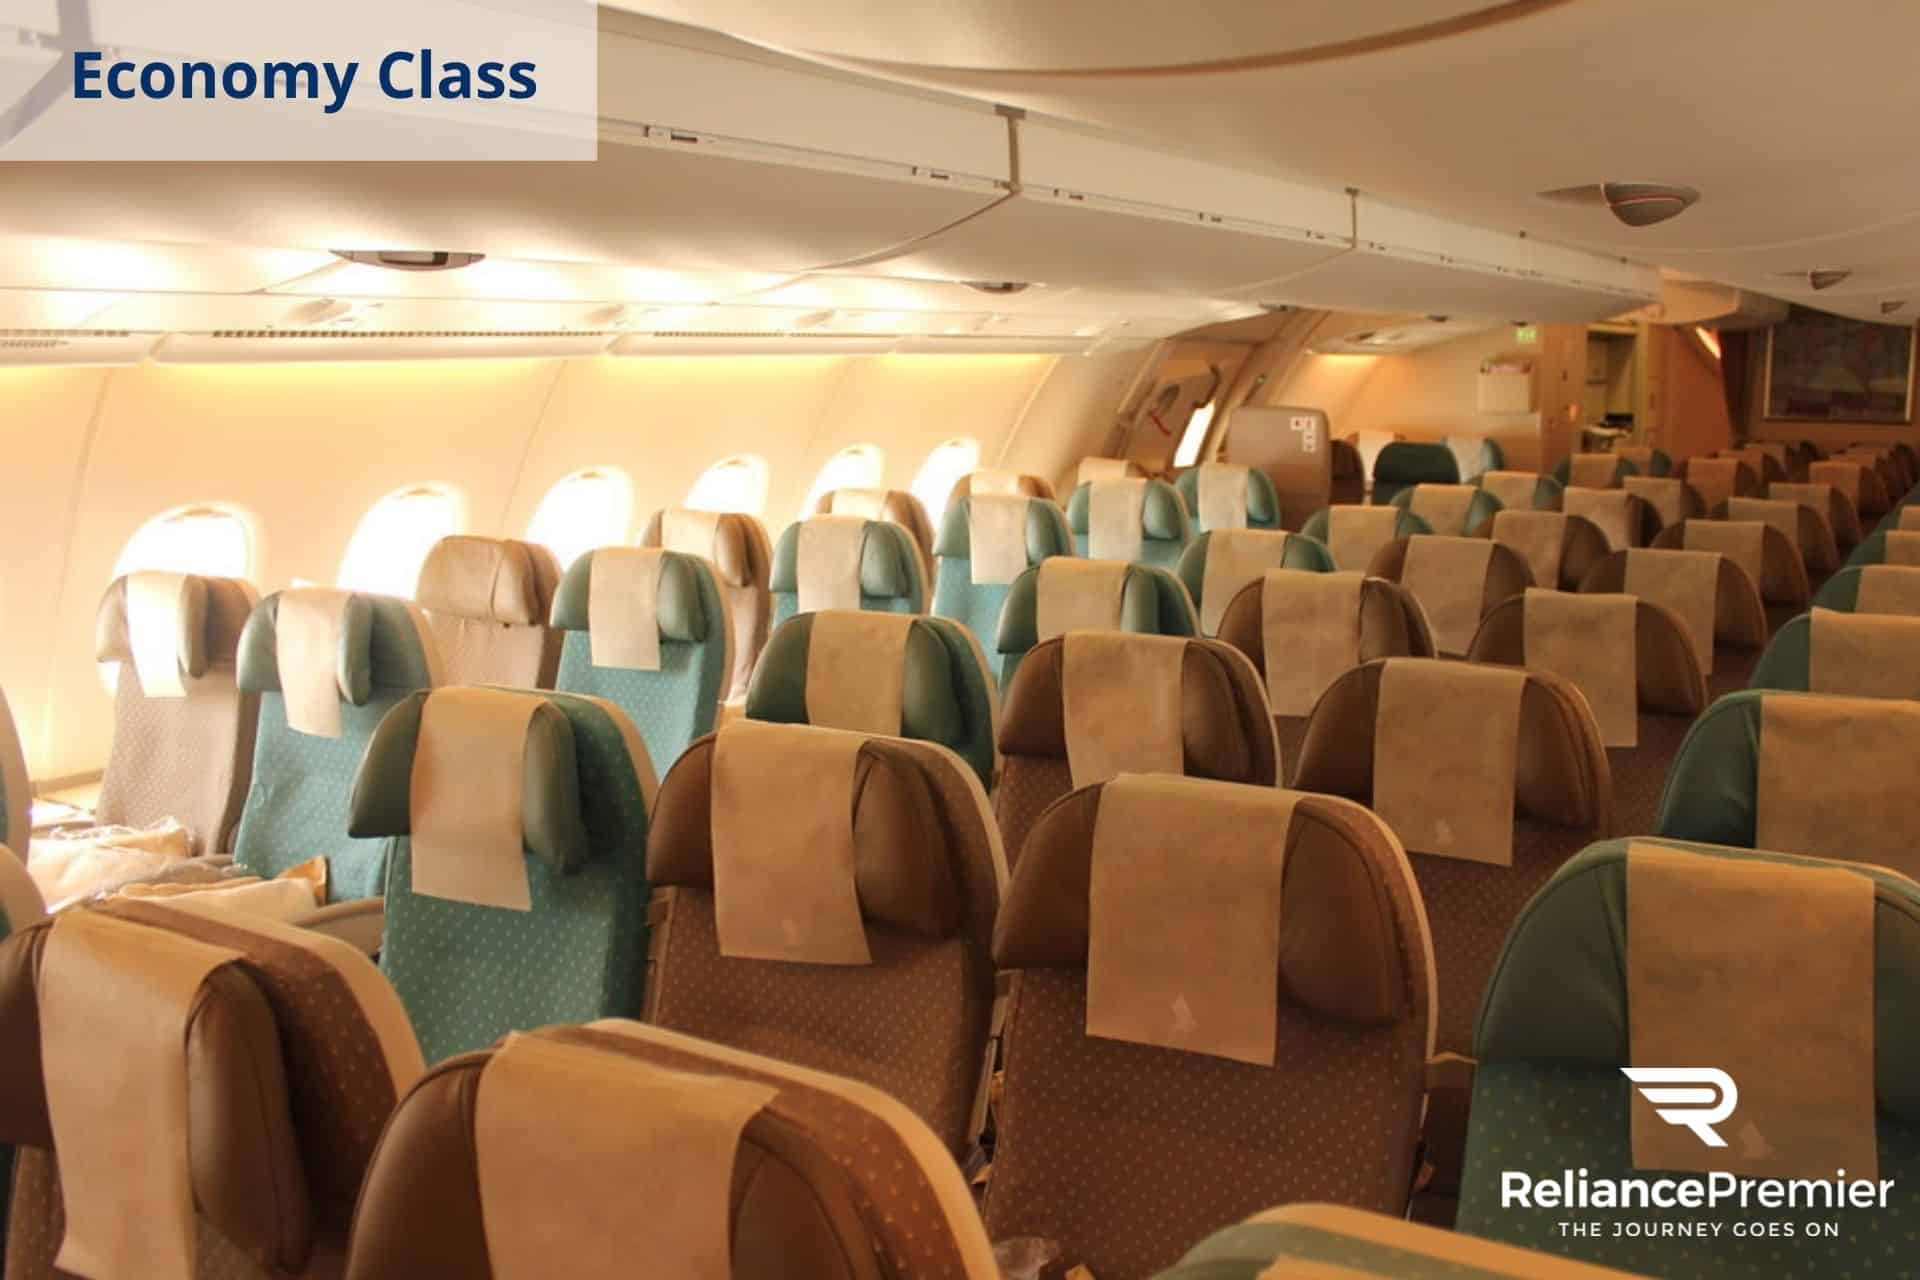 Singapore Airlines Economy Class